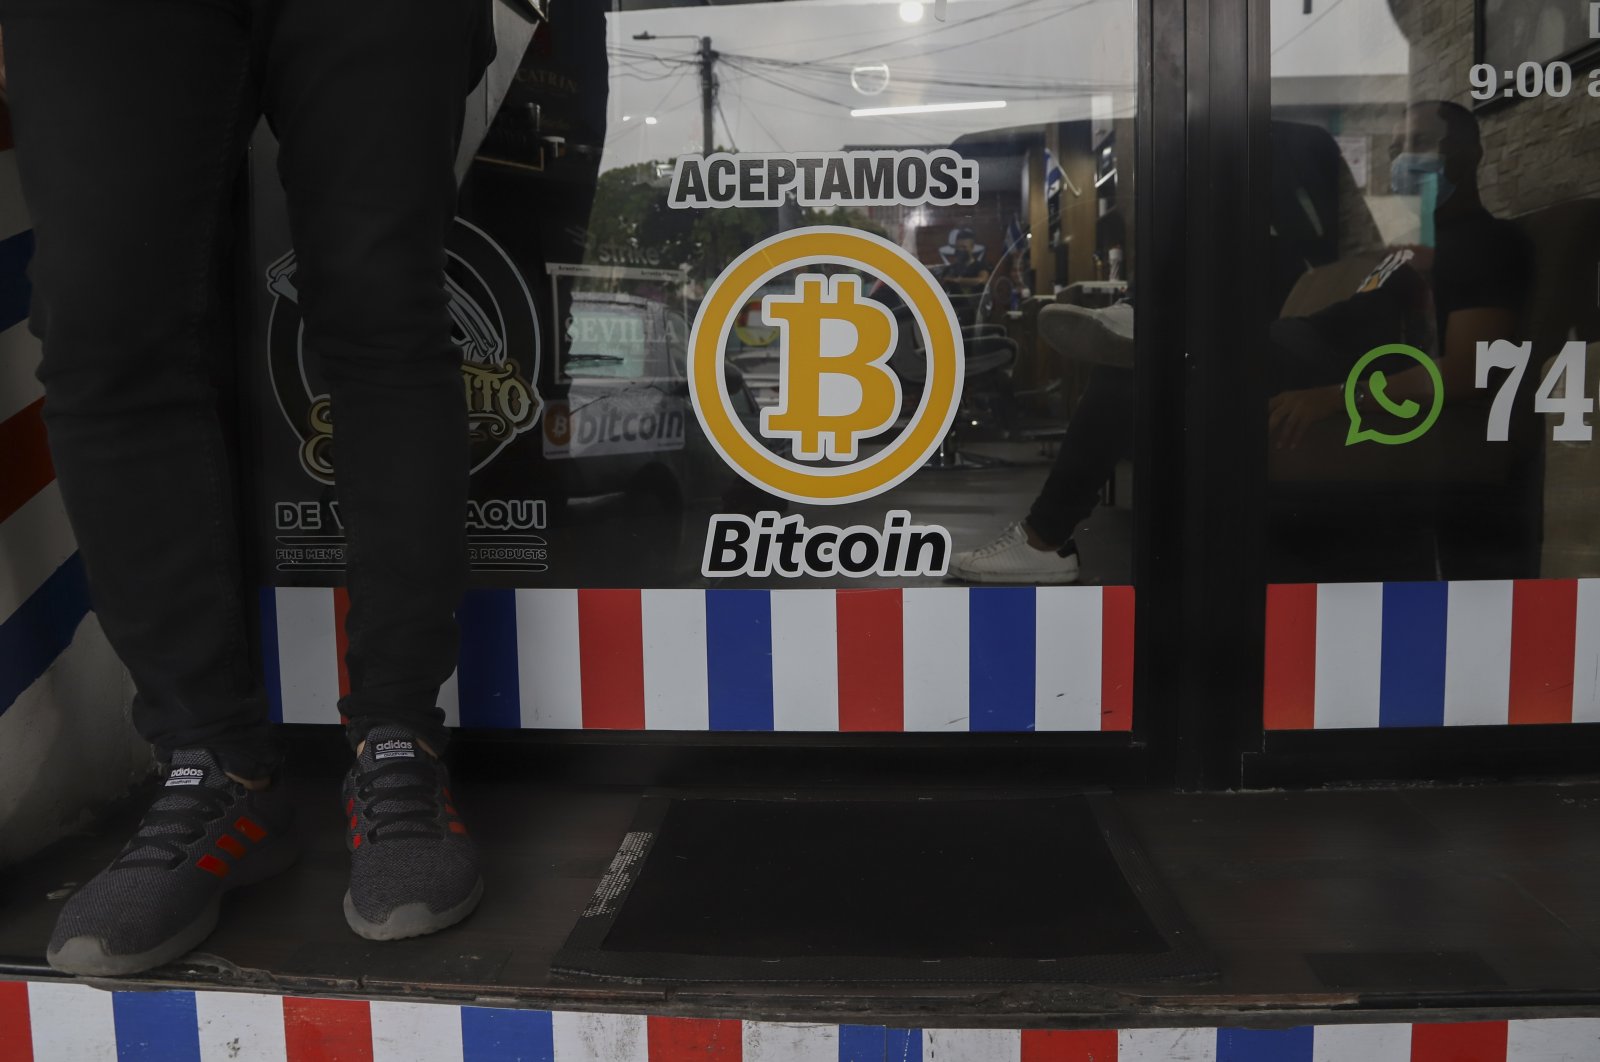 "We accept Bitcoin" is announced at a barber shop in Santa Tecla, El Salvador, Sept. 4, 2021. (AP Photo)